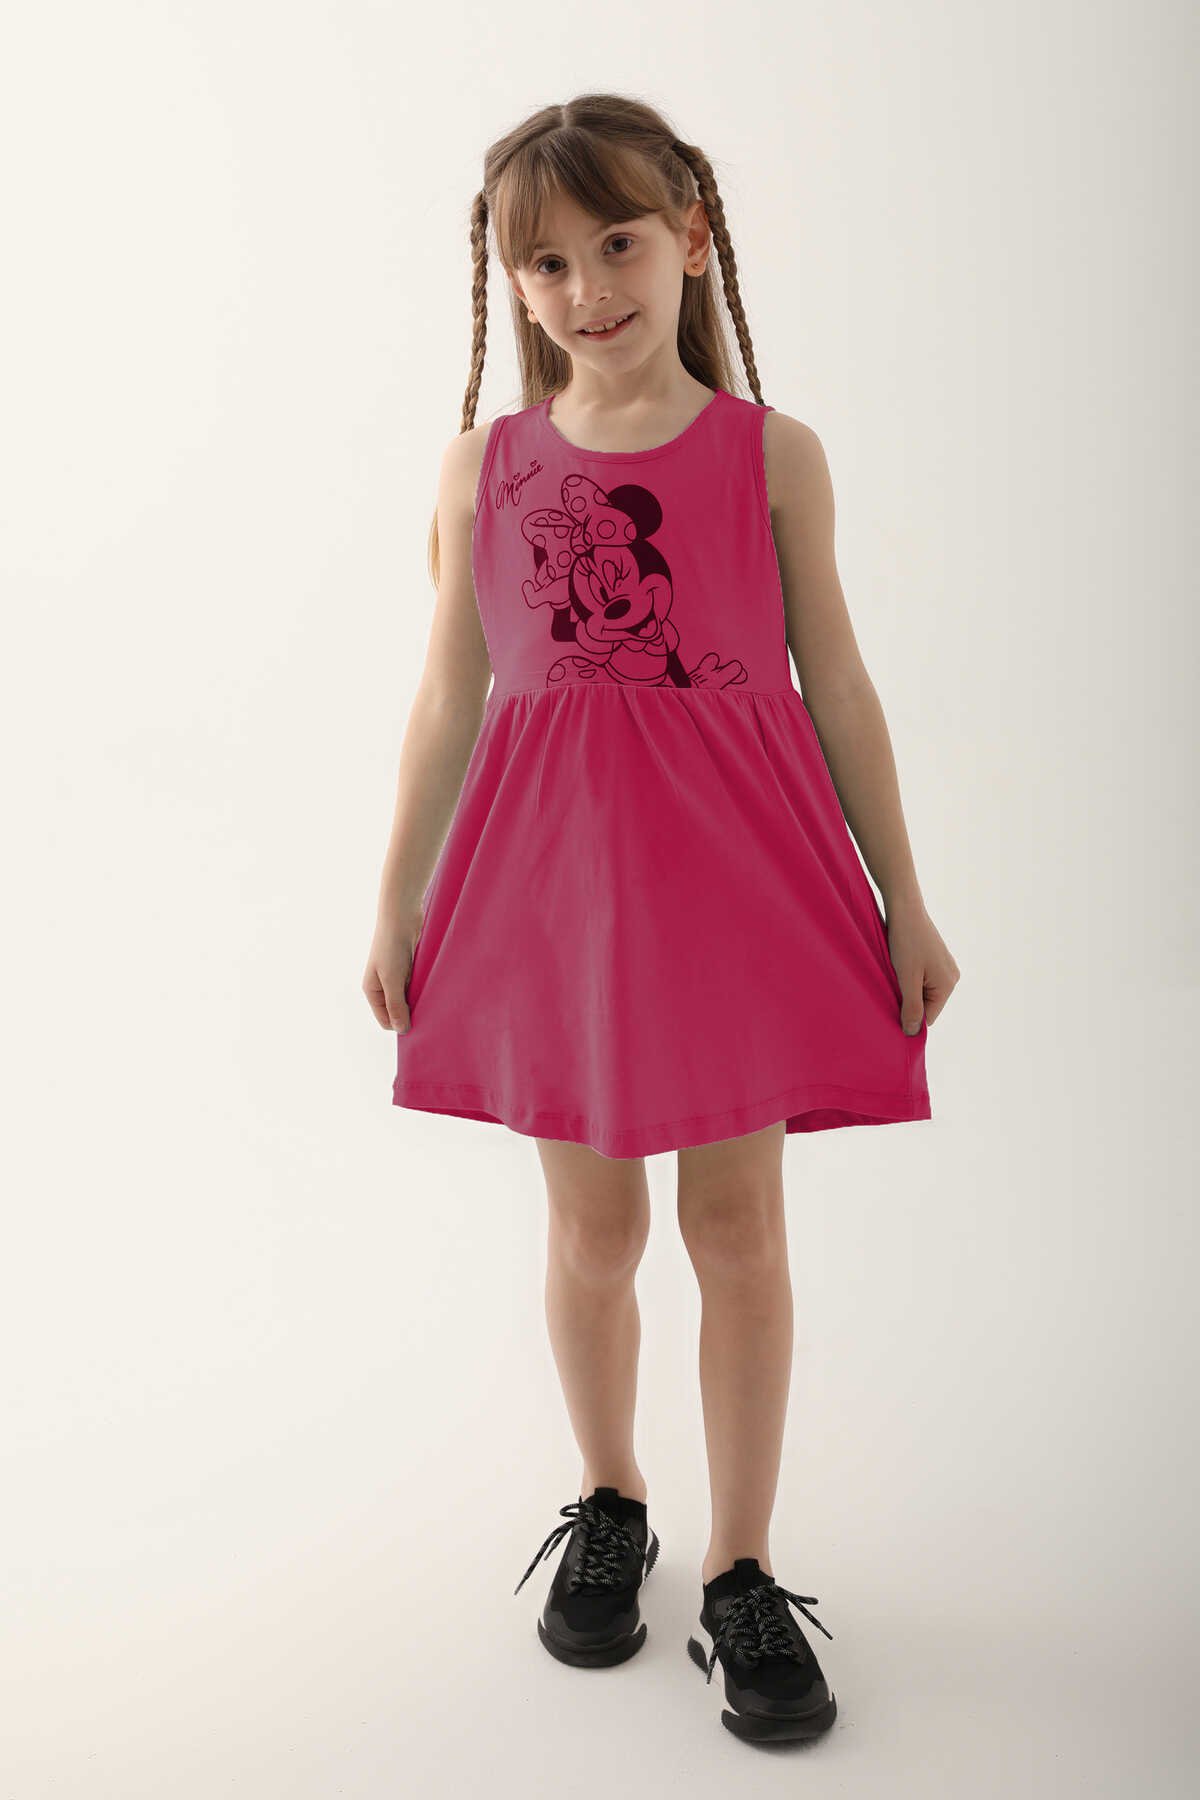 Minnie Mouse - Minnie Mouse D4860-3 Kız Çocuk Elbise Karanfil